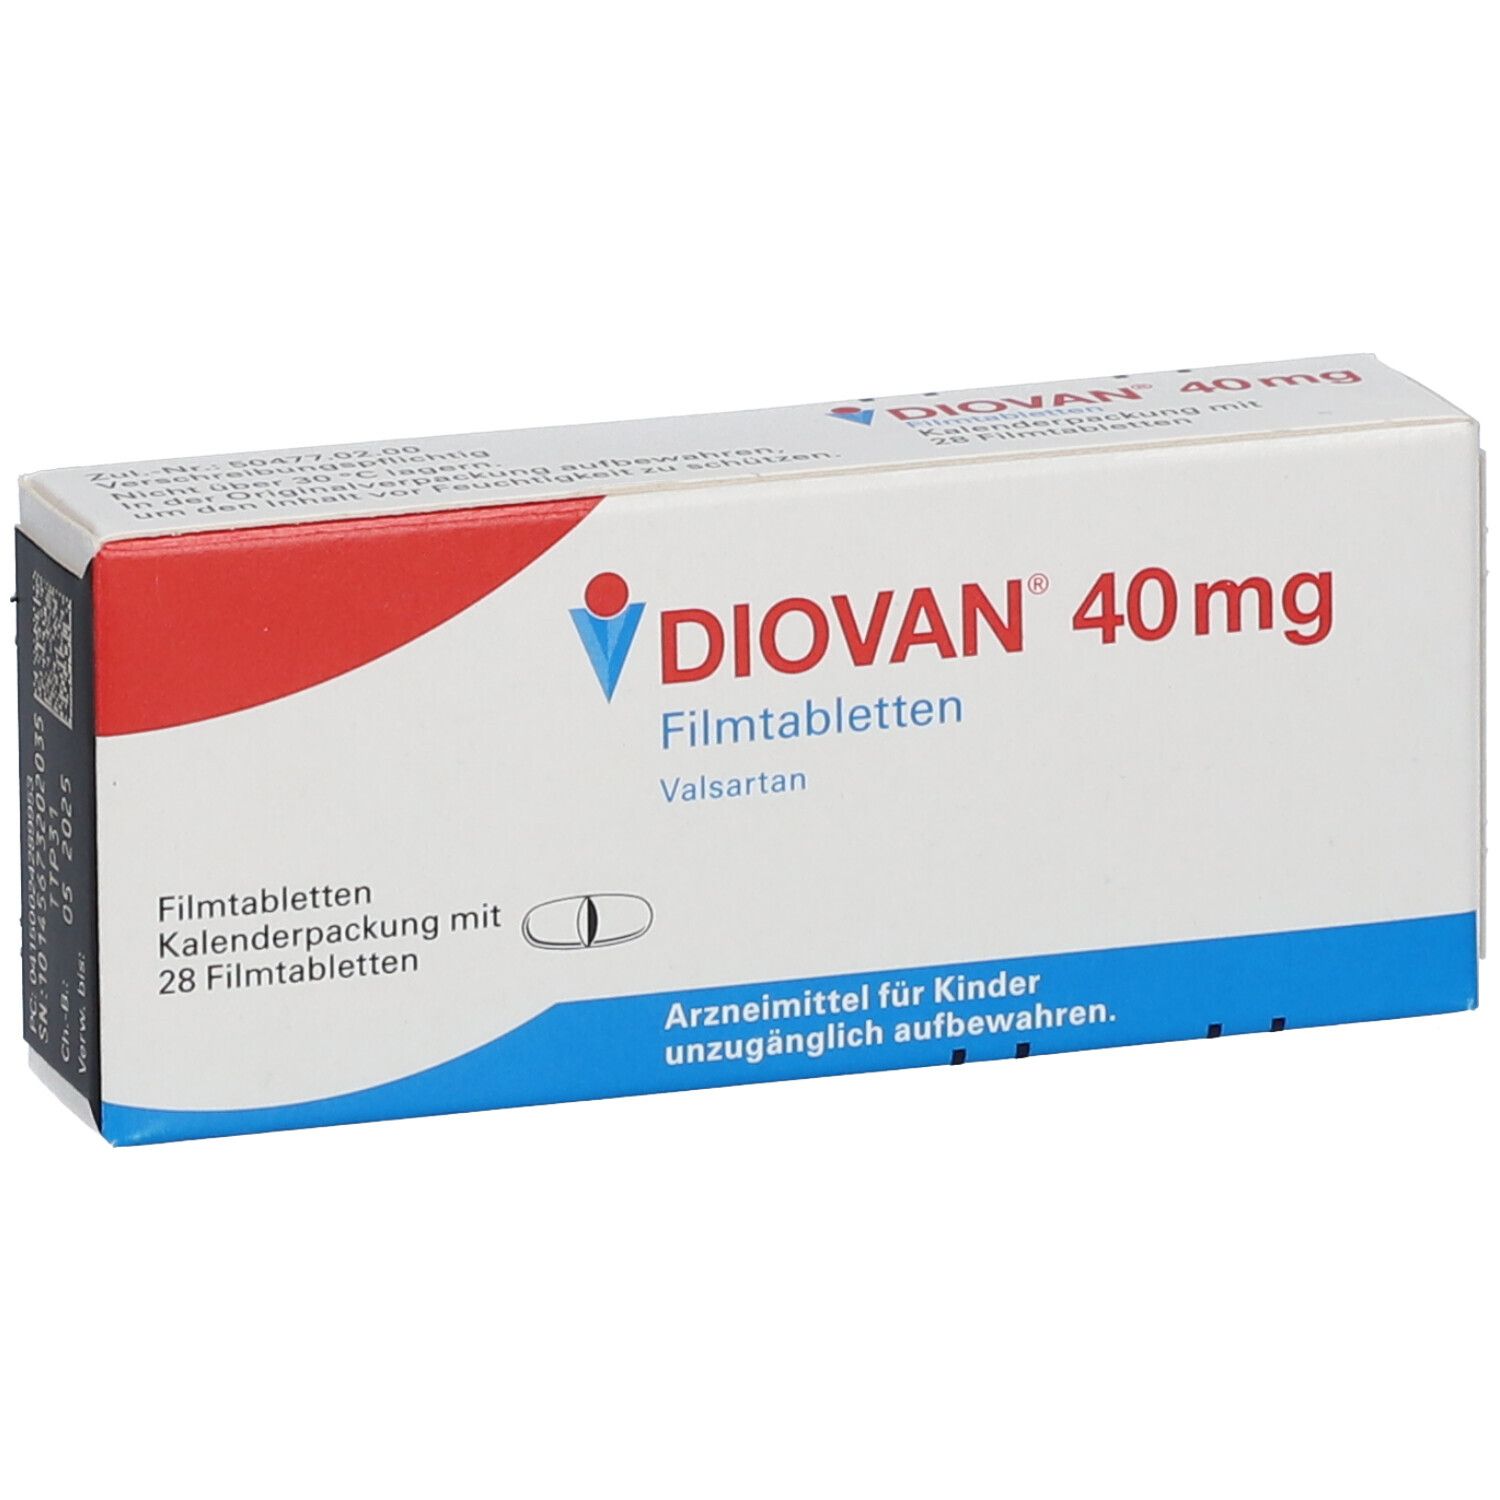 Diovan® 40 mg